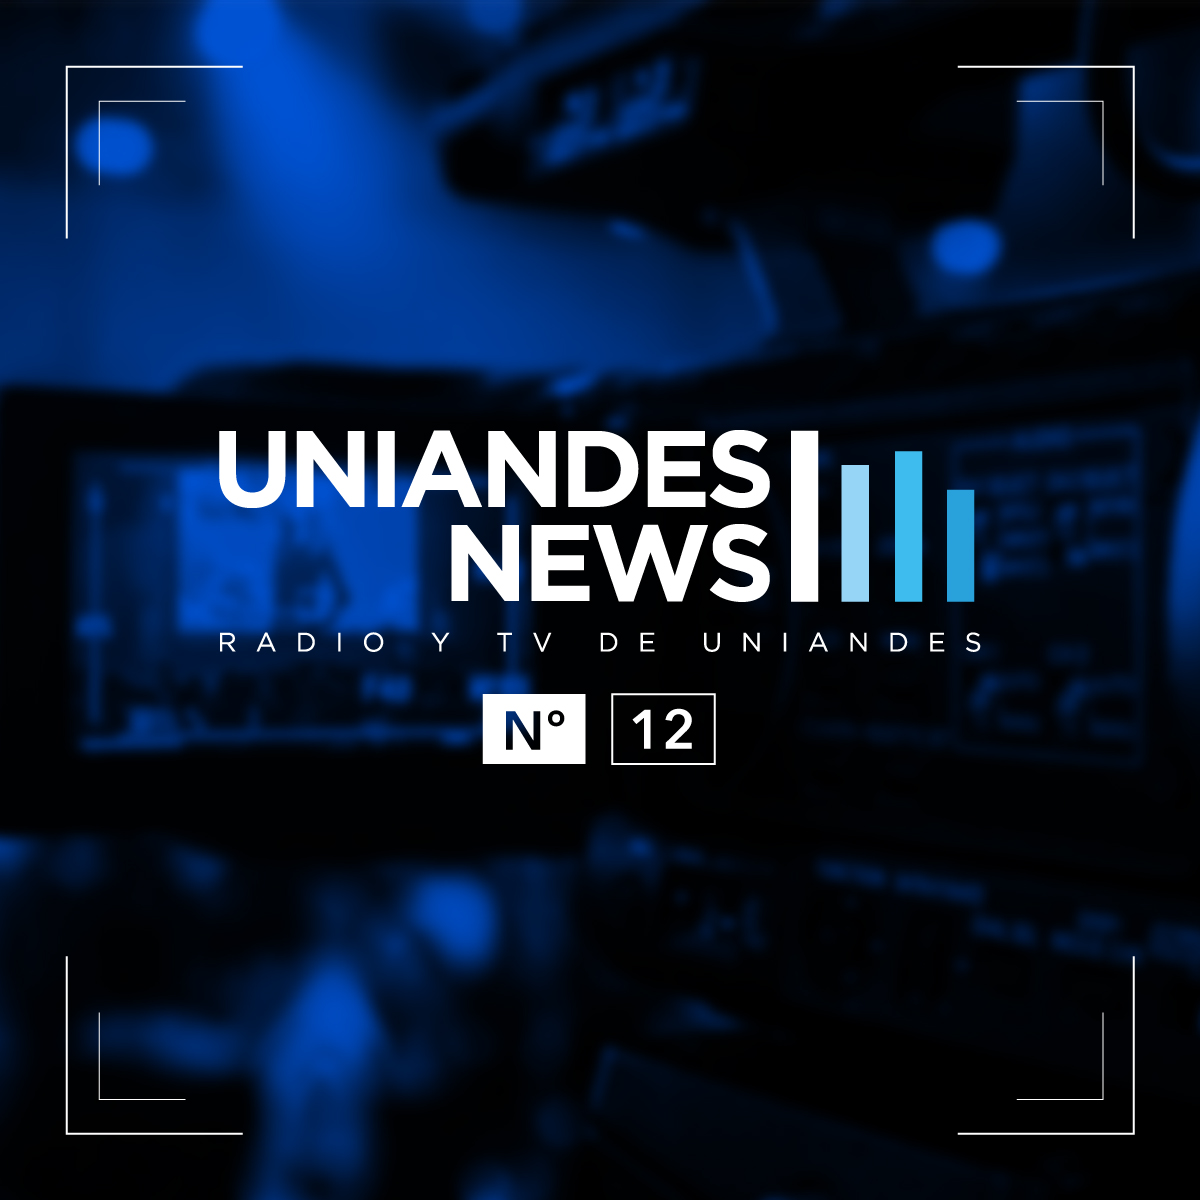 Uniandes news 12